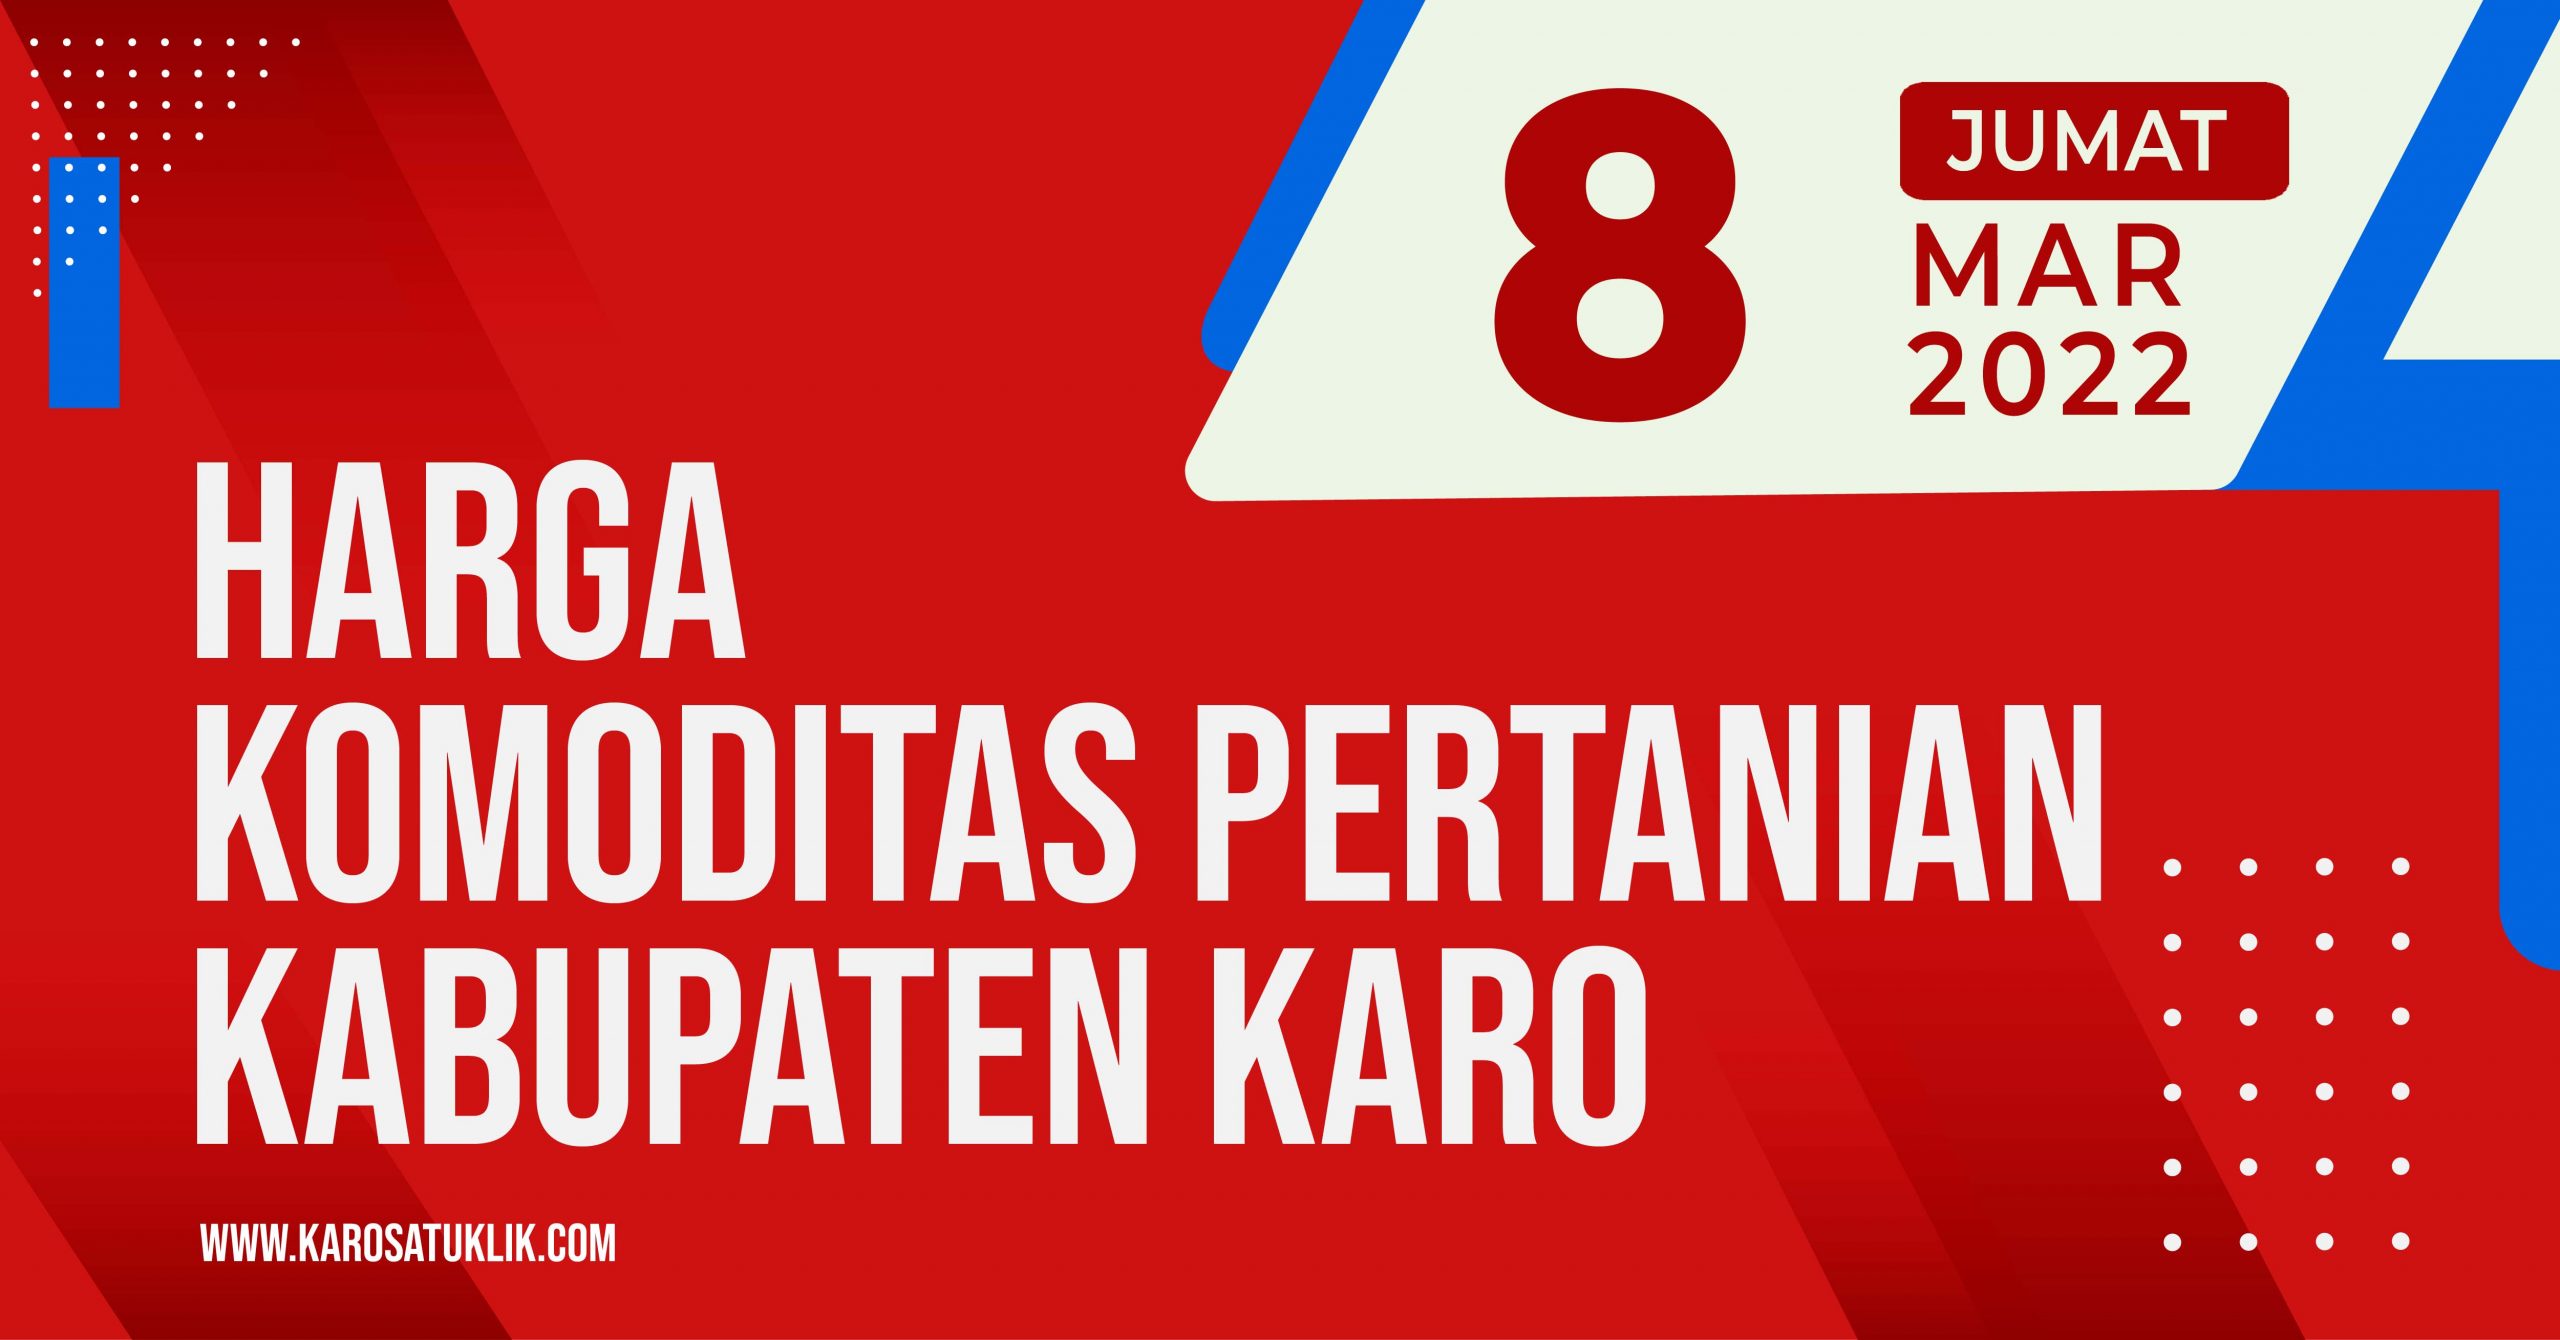 Daftar Harga Komoditas Pertanian Kabupaten Karo, Jumat 8 April 2022